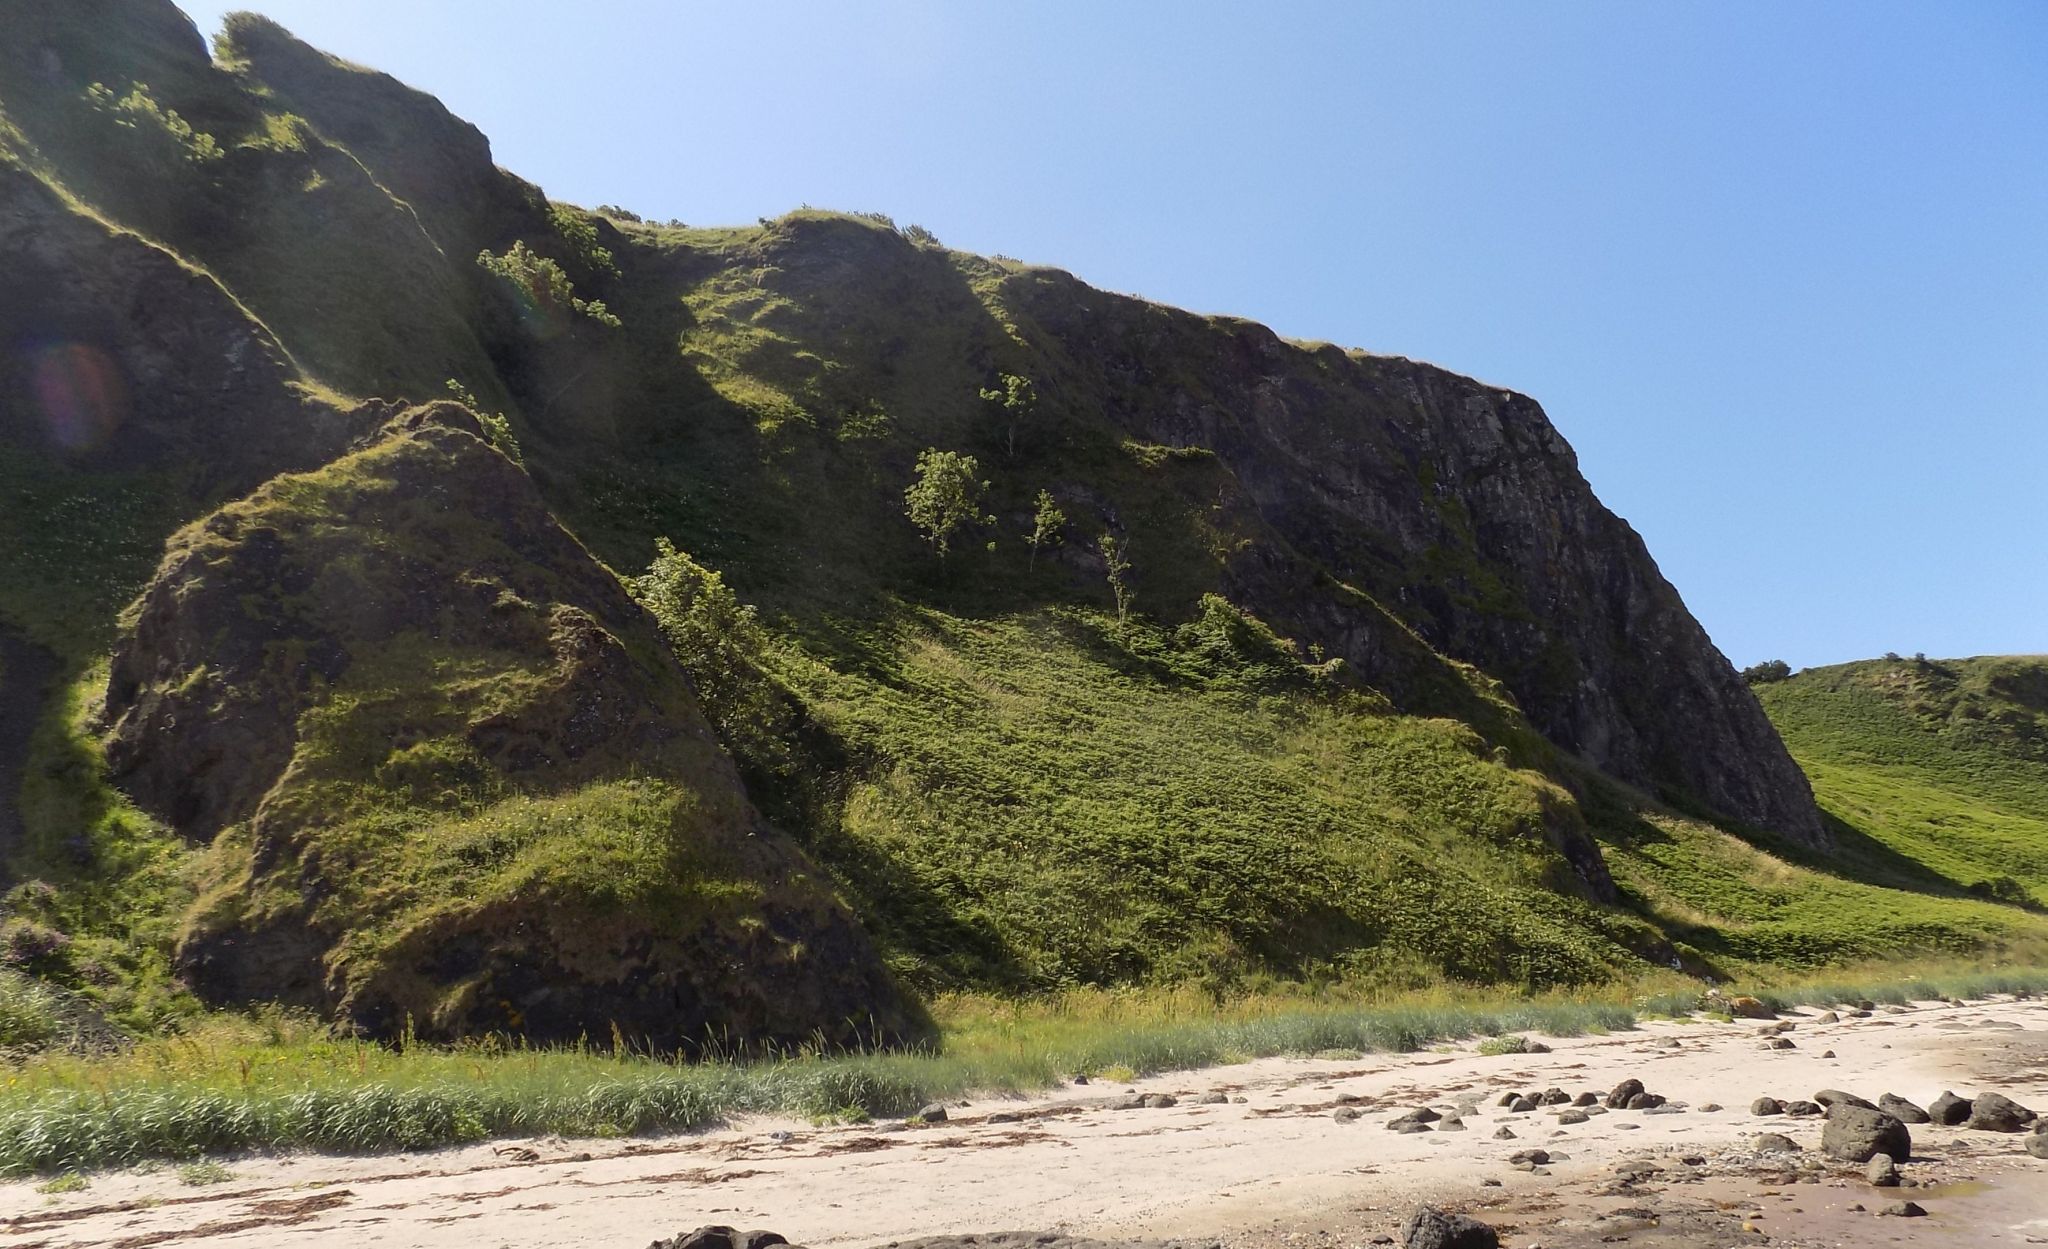 The rocky escarpment of the "Heads of Ayr"